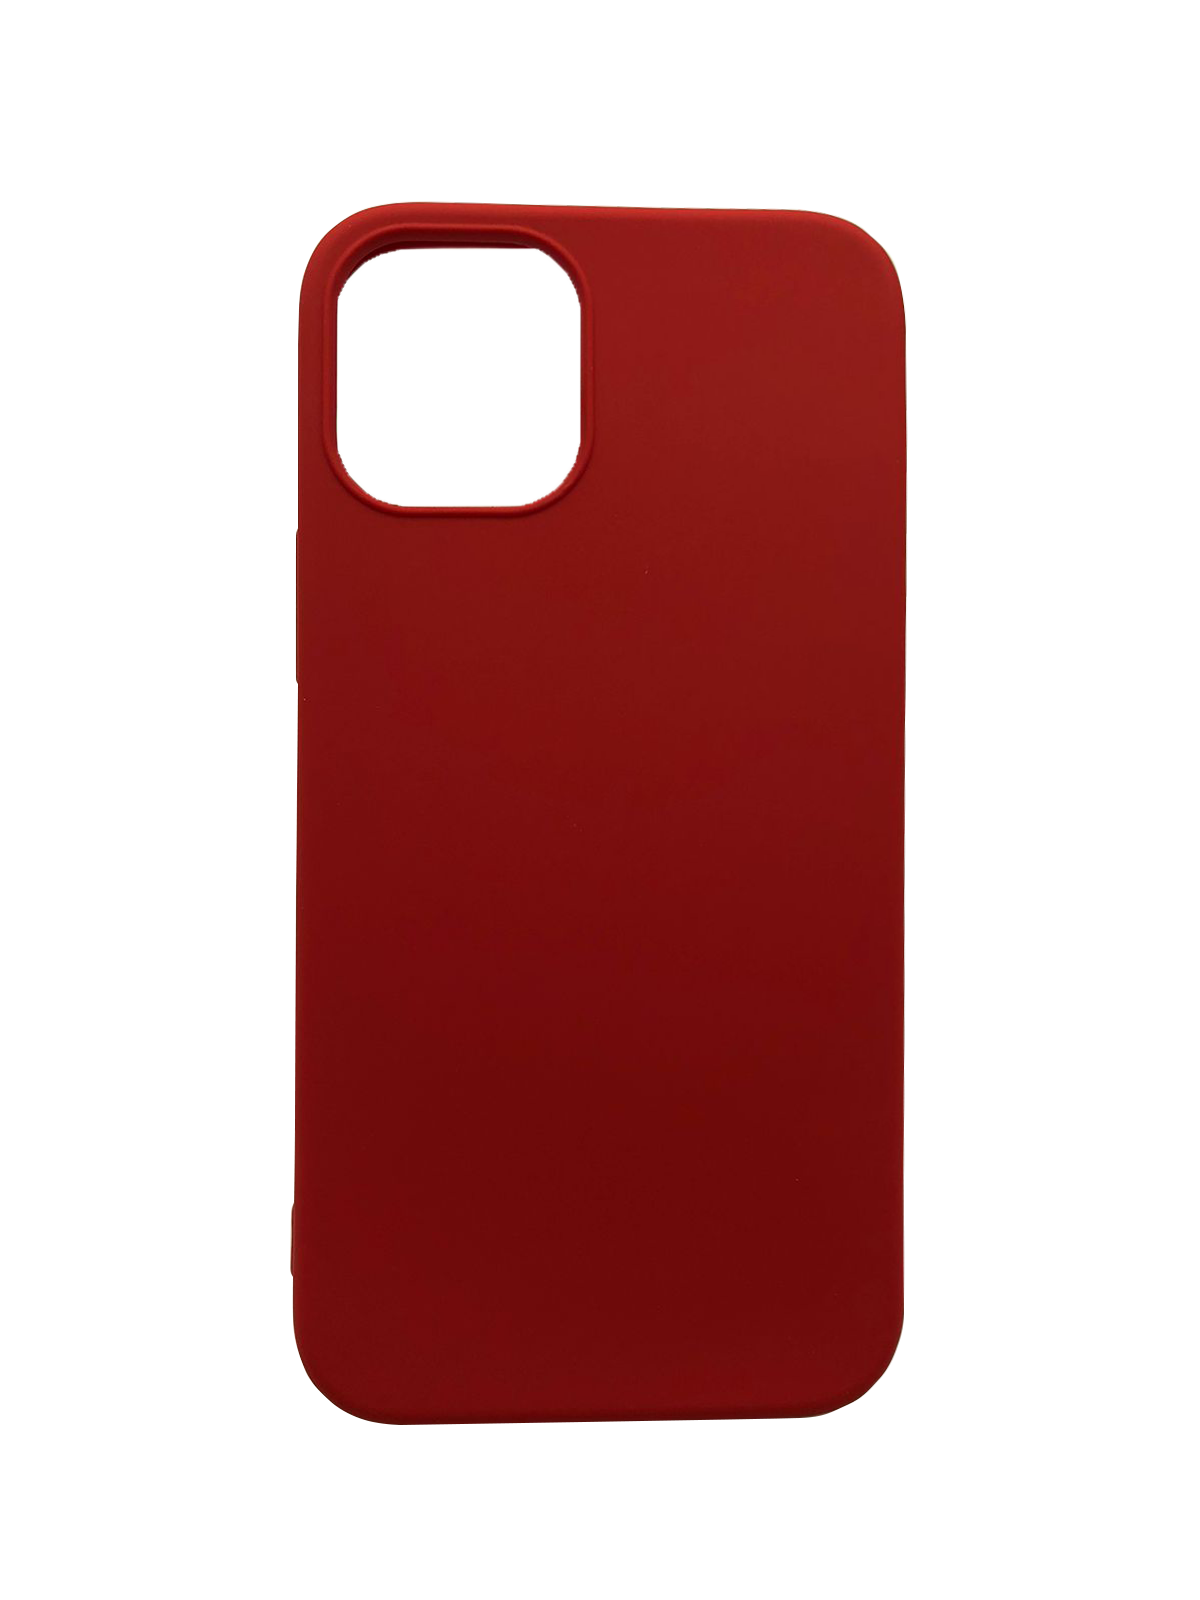 Silicone Case iPHONE 12 MINI RED